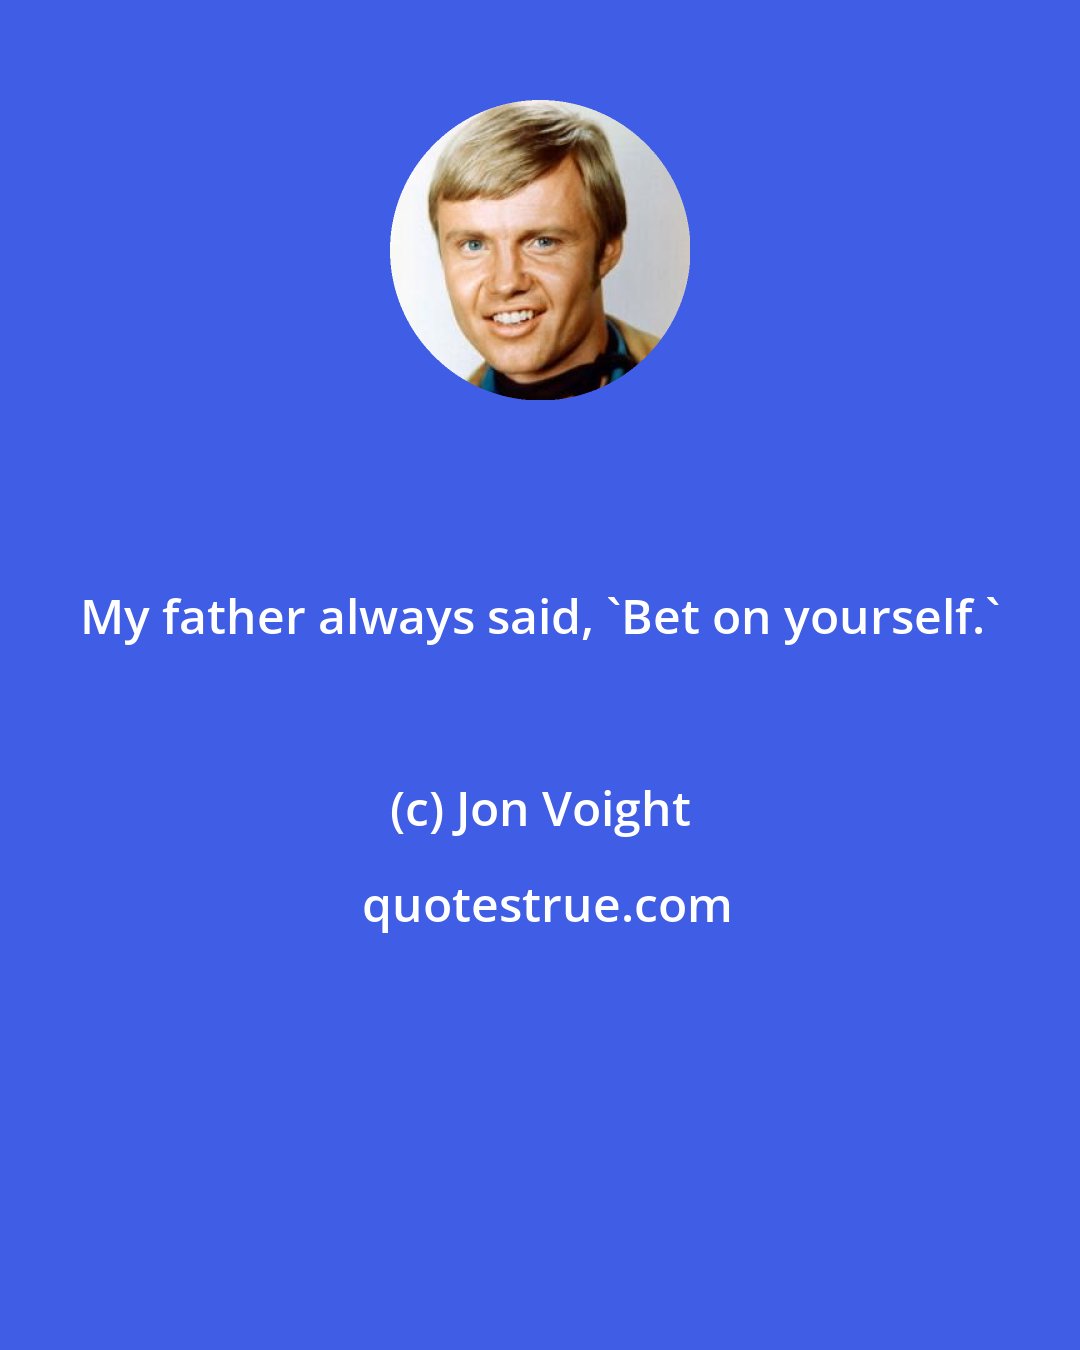 Jon Voight: My father always said, 'Bet on yourself.'